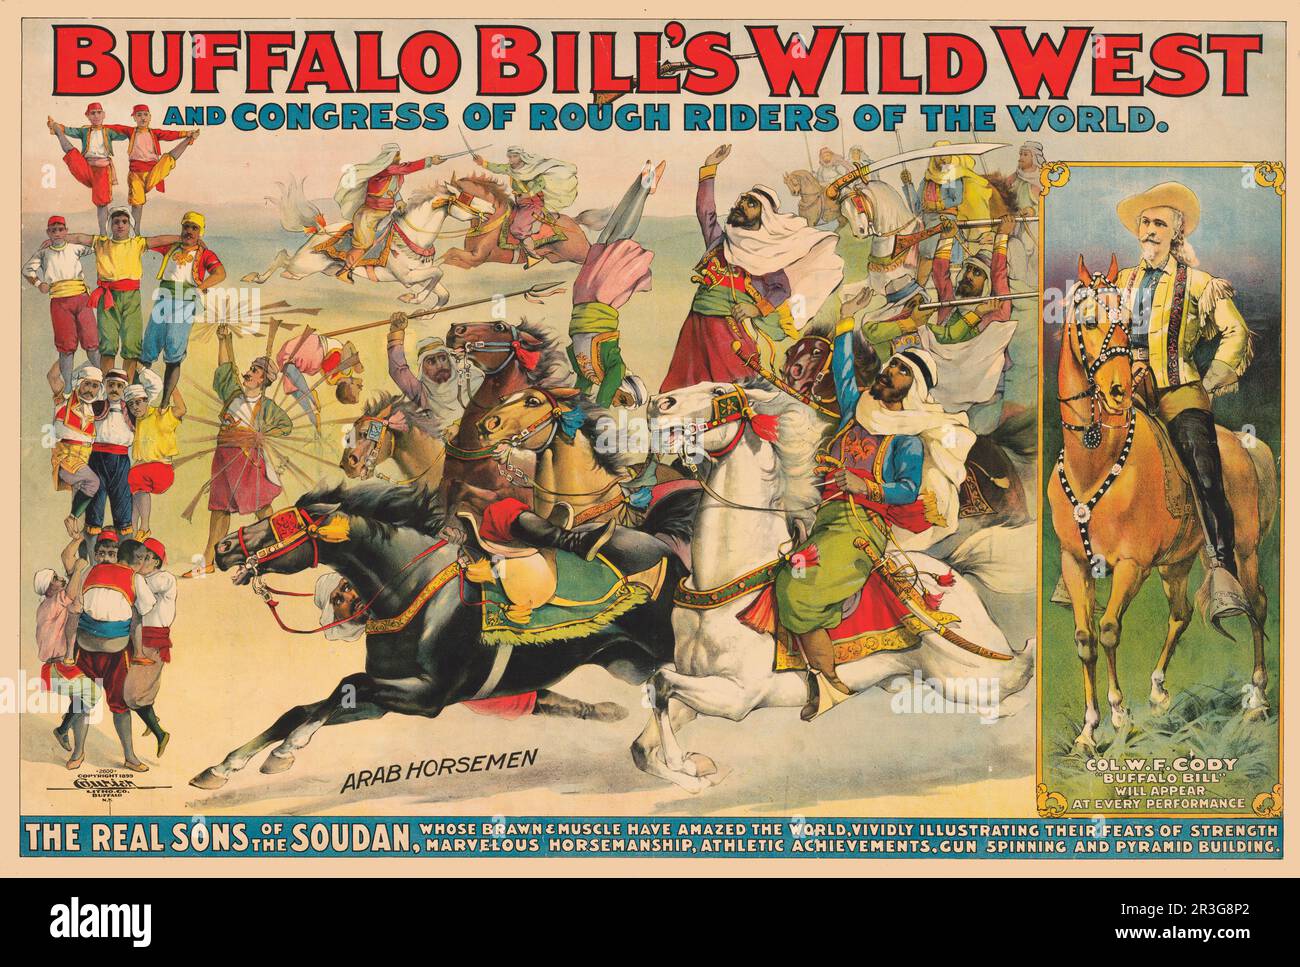 Vintage Buffalo Bill's Wild West circus poster showing an Arab horsemen performing on horseback, circa 1899. Stock Photo